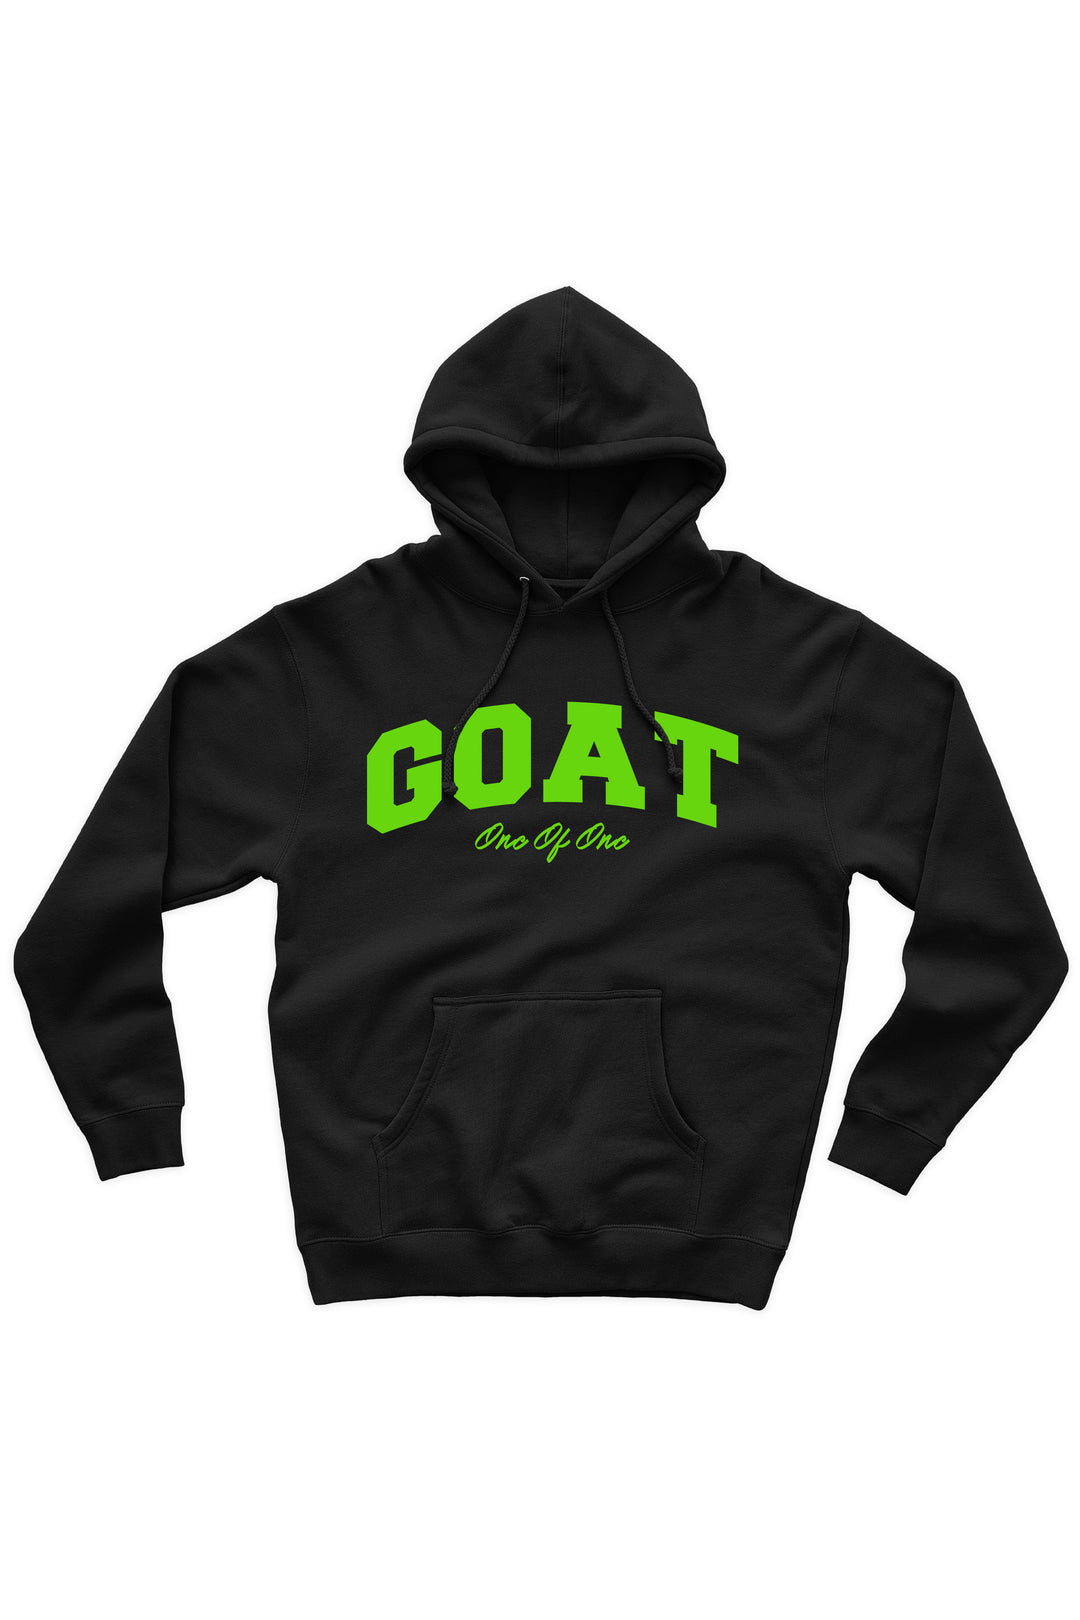 Goat Hoodie (Lime Green Logo) - Zamage